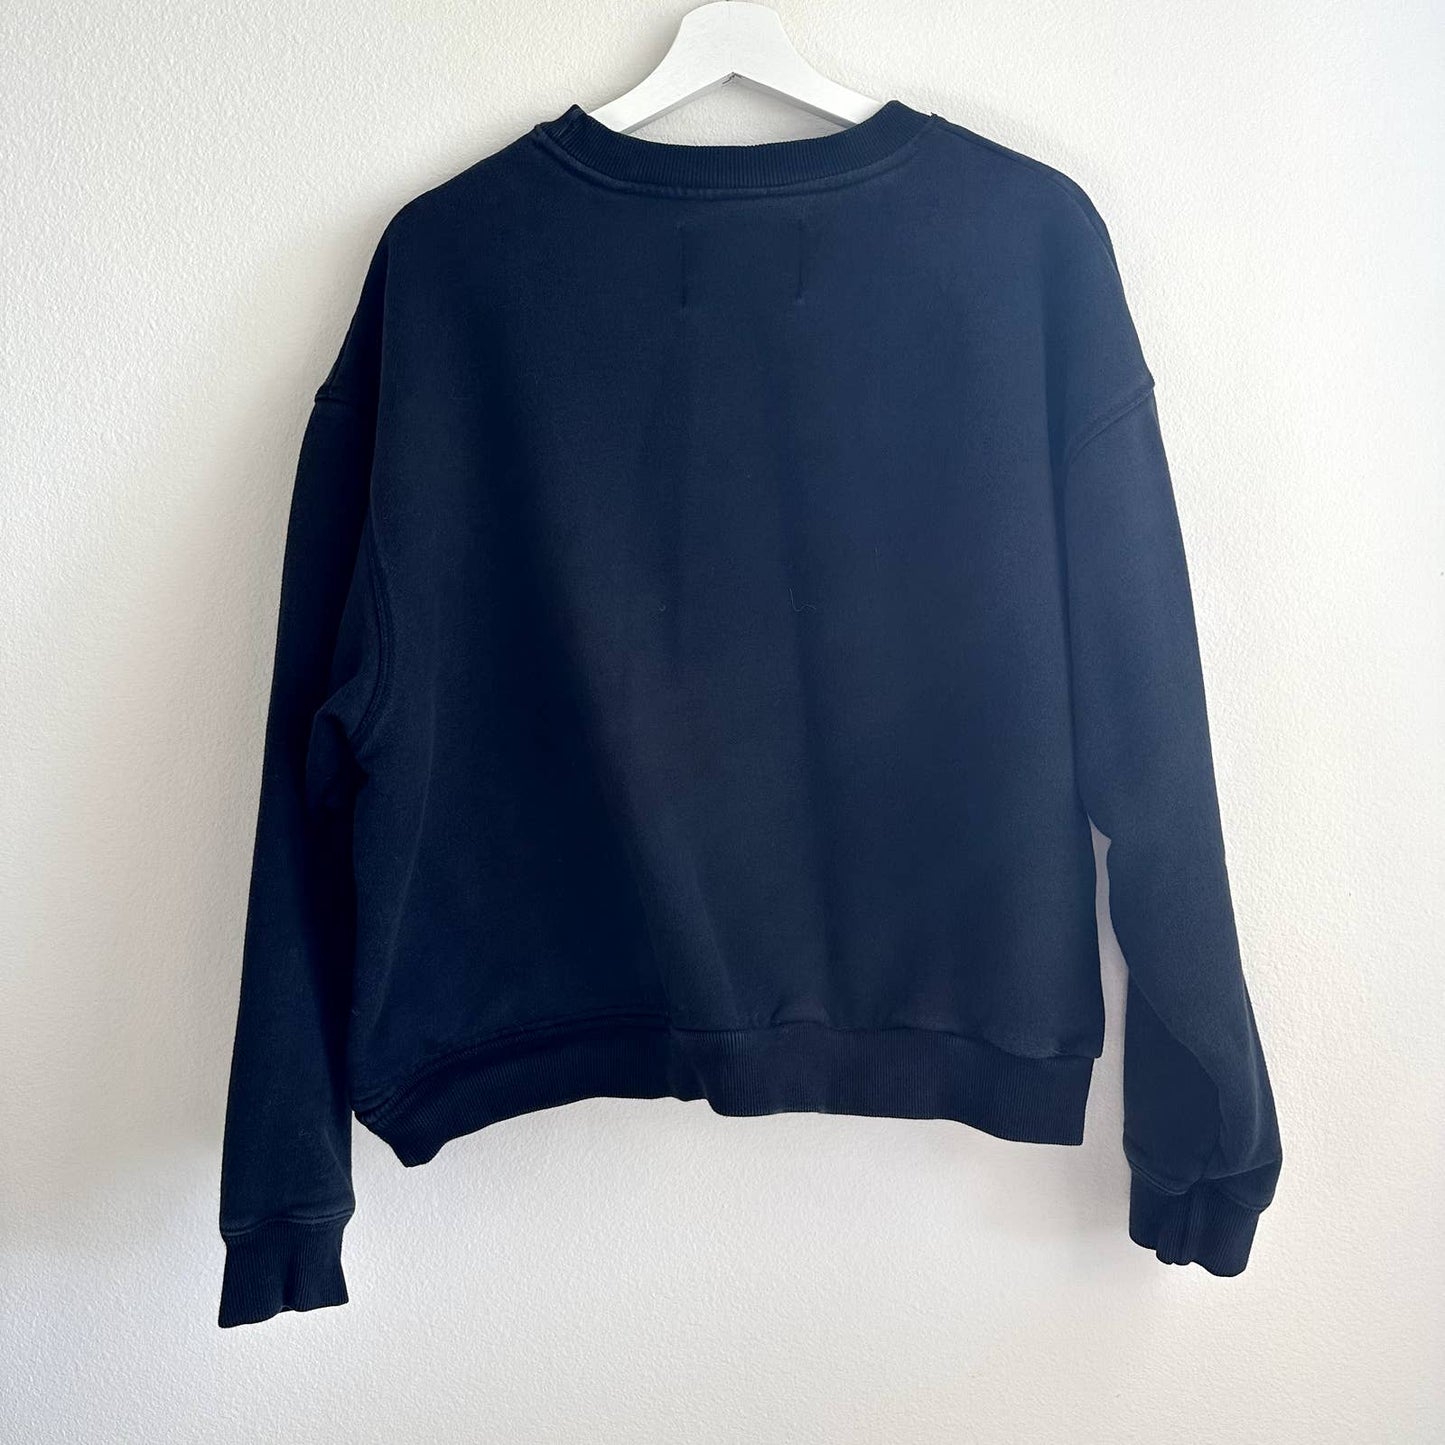 Black crewneck asymmetric zipper hem long sleeve sweatshirt sweater